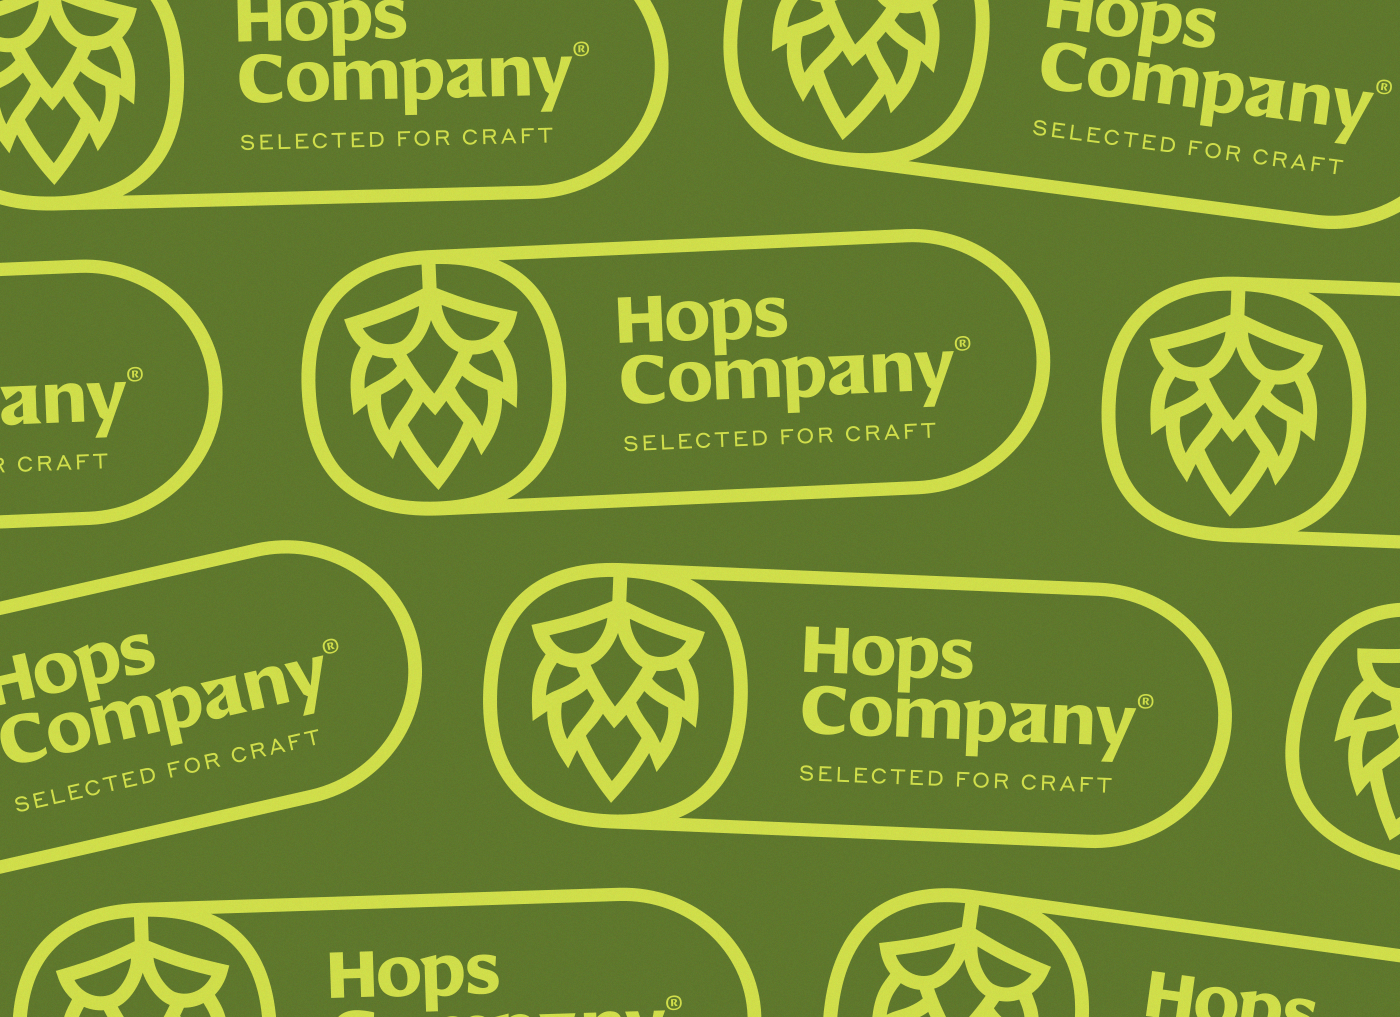 Hops Company Identidade Visual - HopsCo.